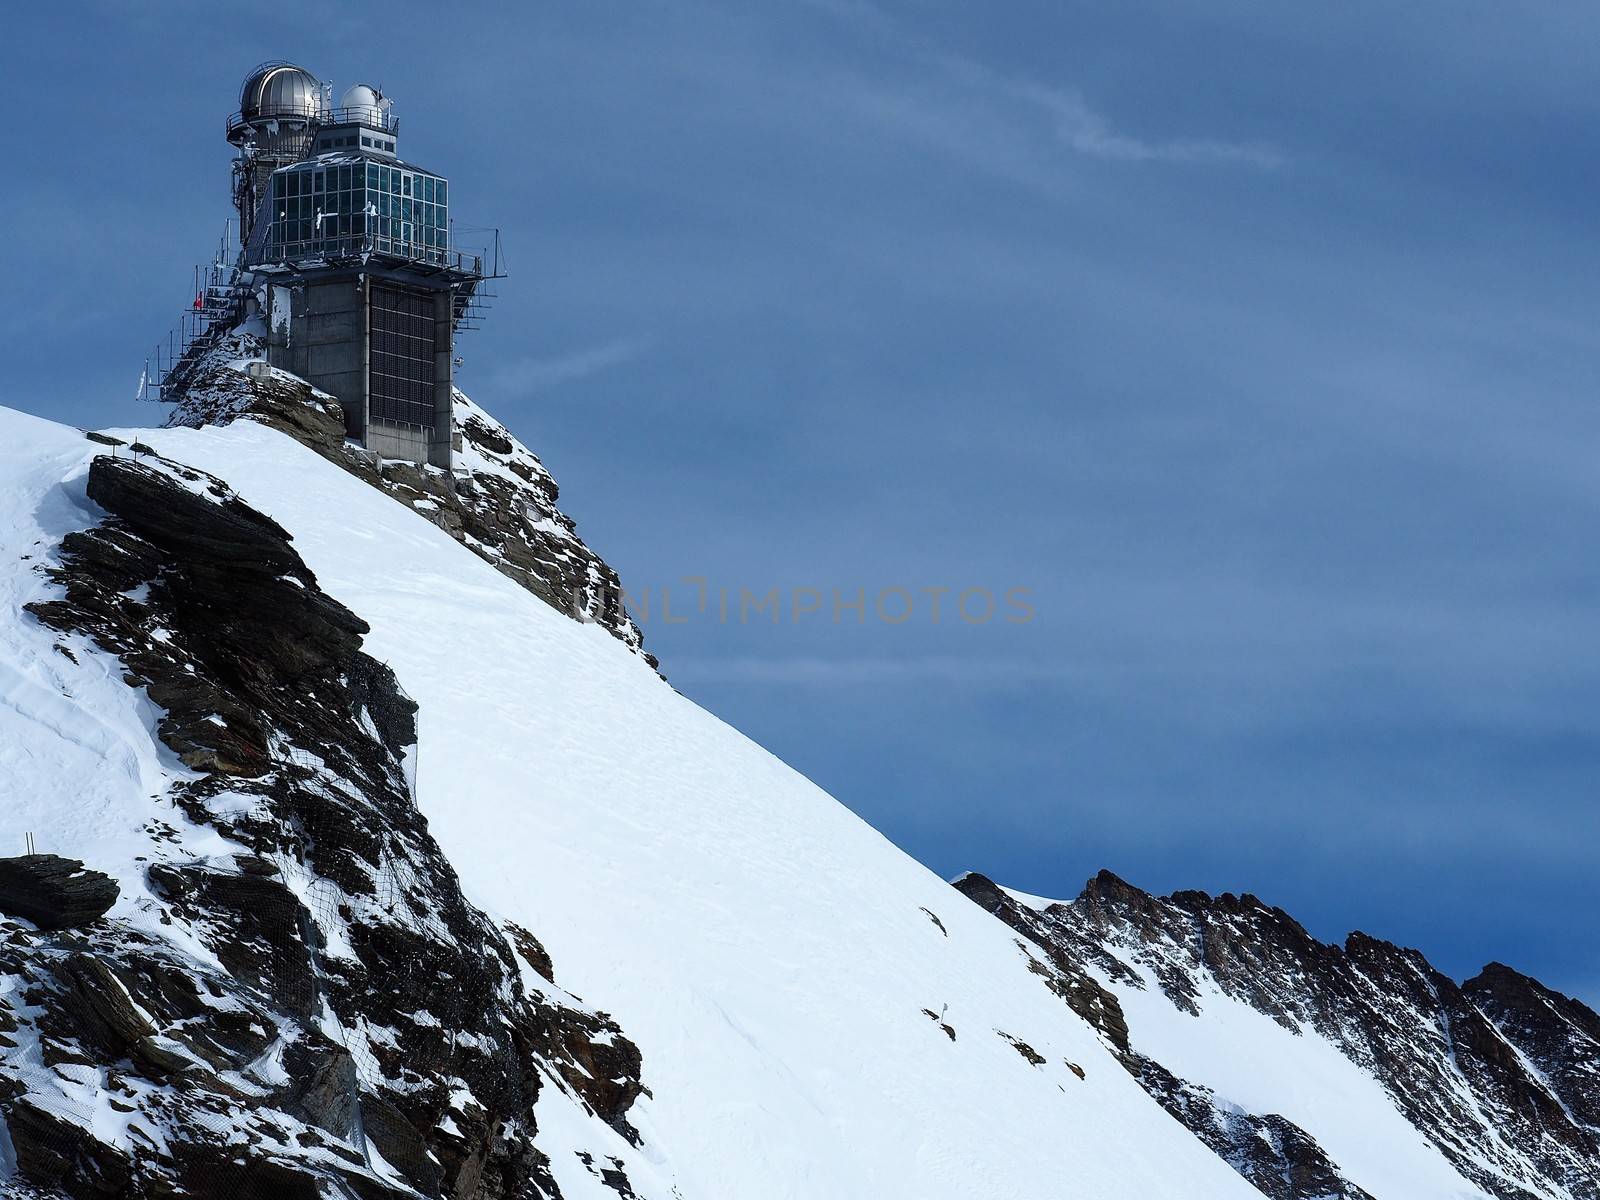 Sphinx Observatory, Jungfrau Plateau, Swiss Alps, Switzerland by WernBkk